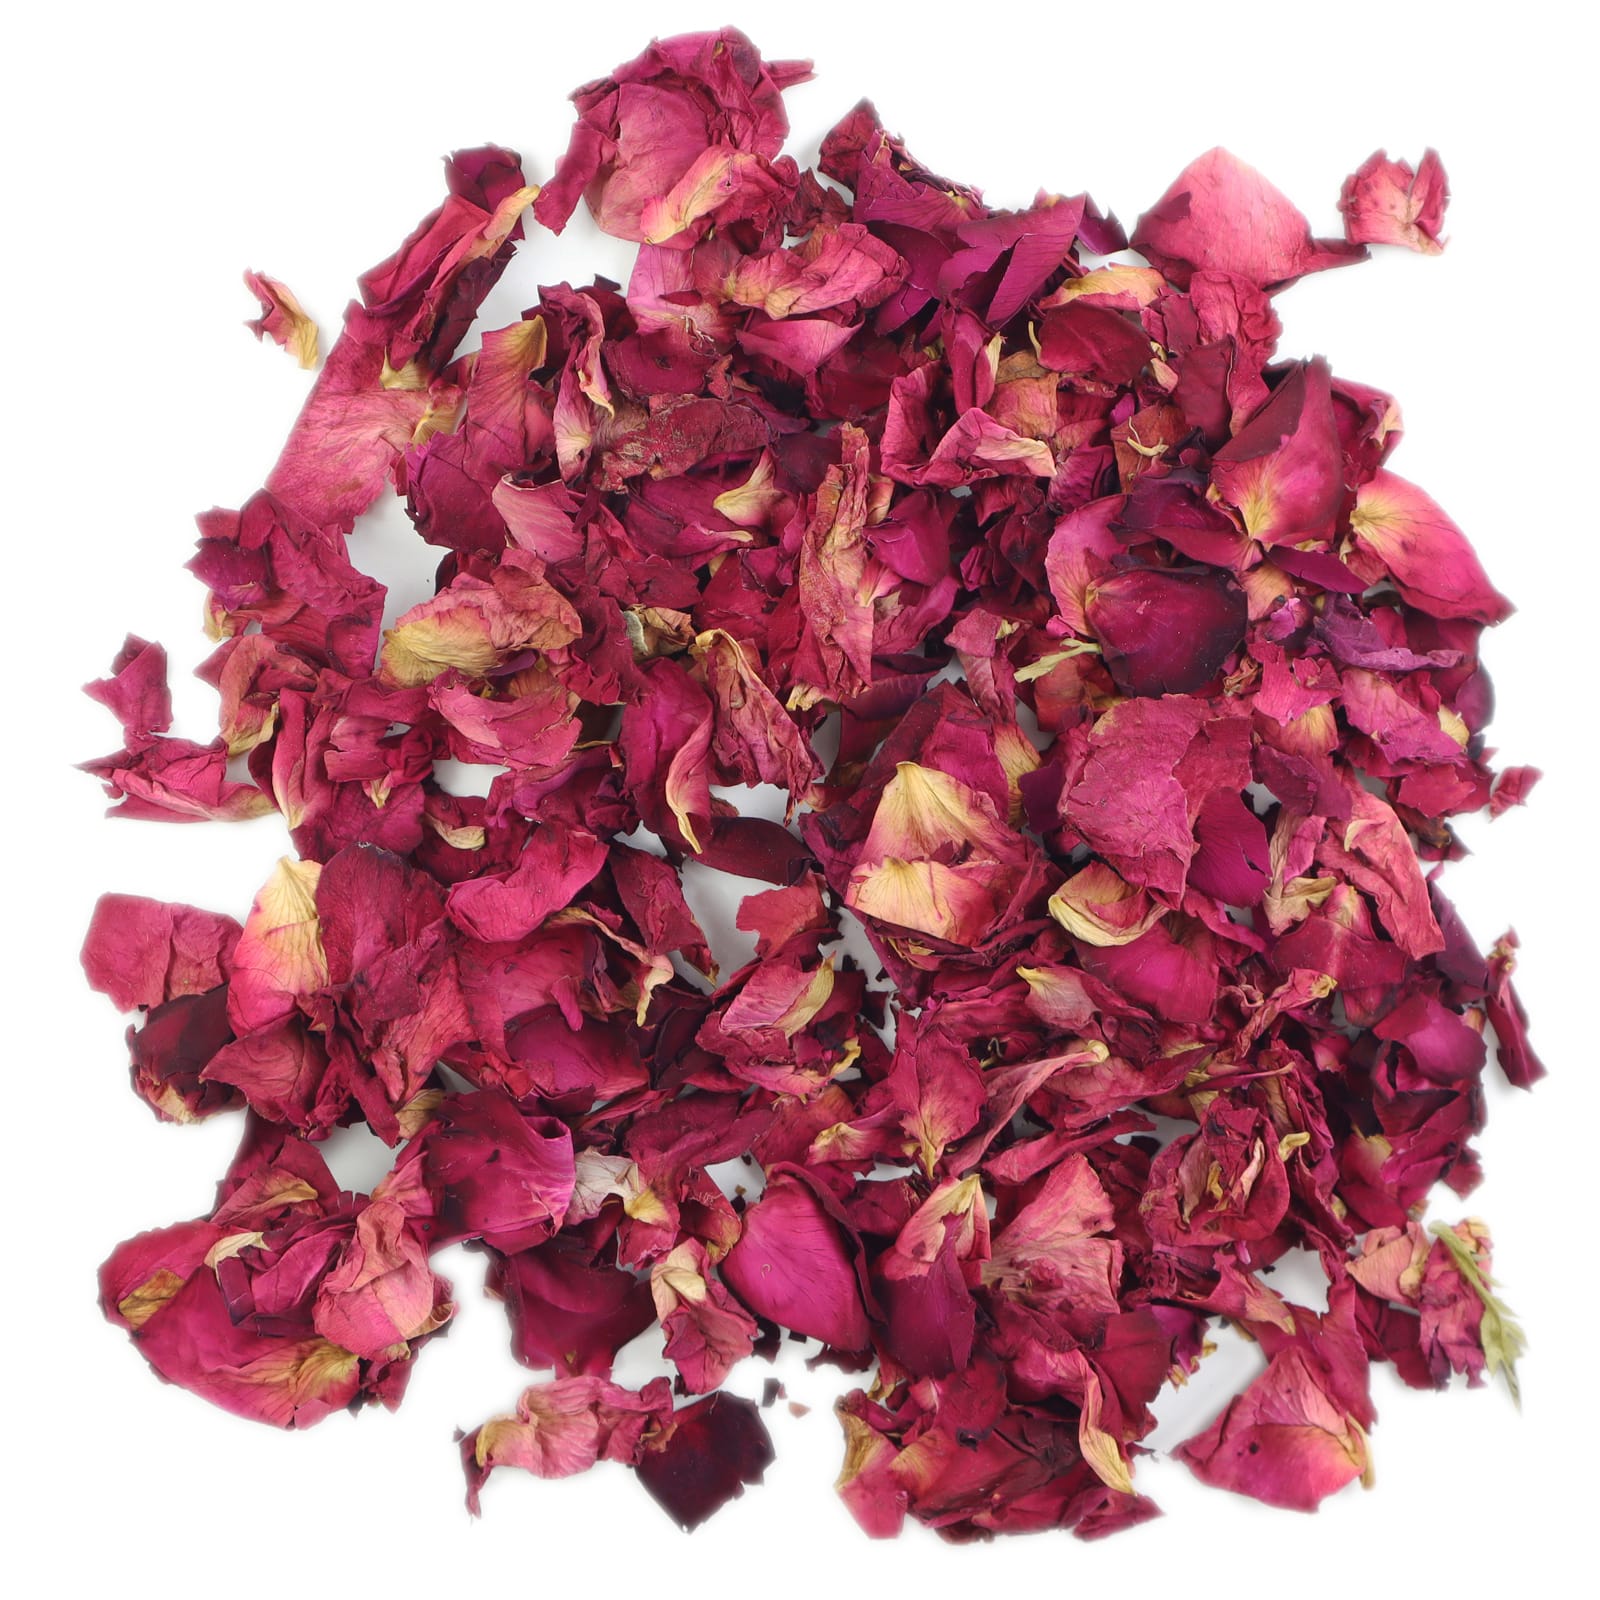 12 Pack: Rose Petals Bath &#x26; Body Base Additive by Make Market&#xAE;